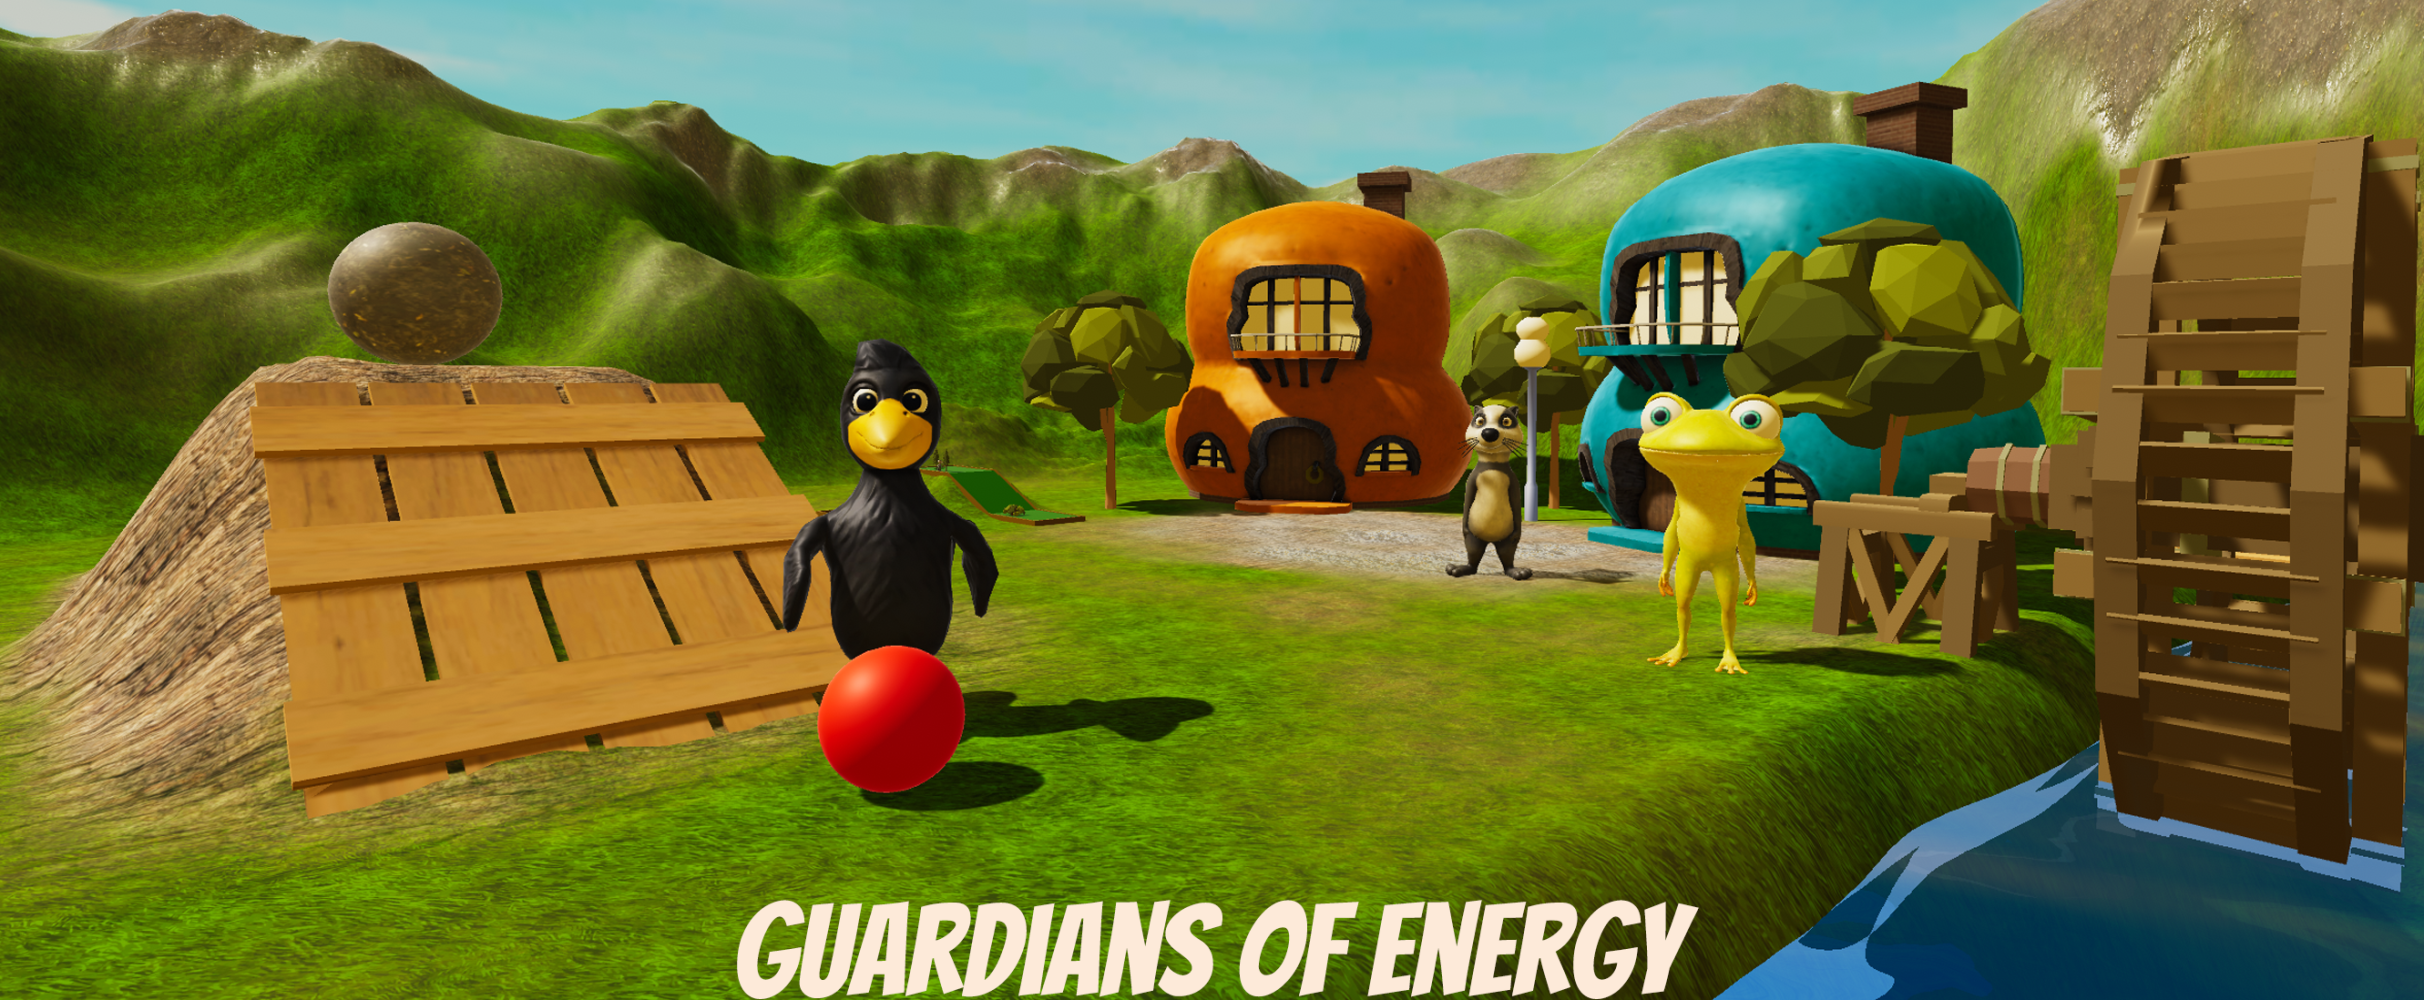 Guardians Of Energy ART